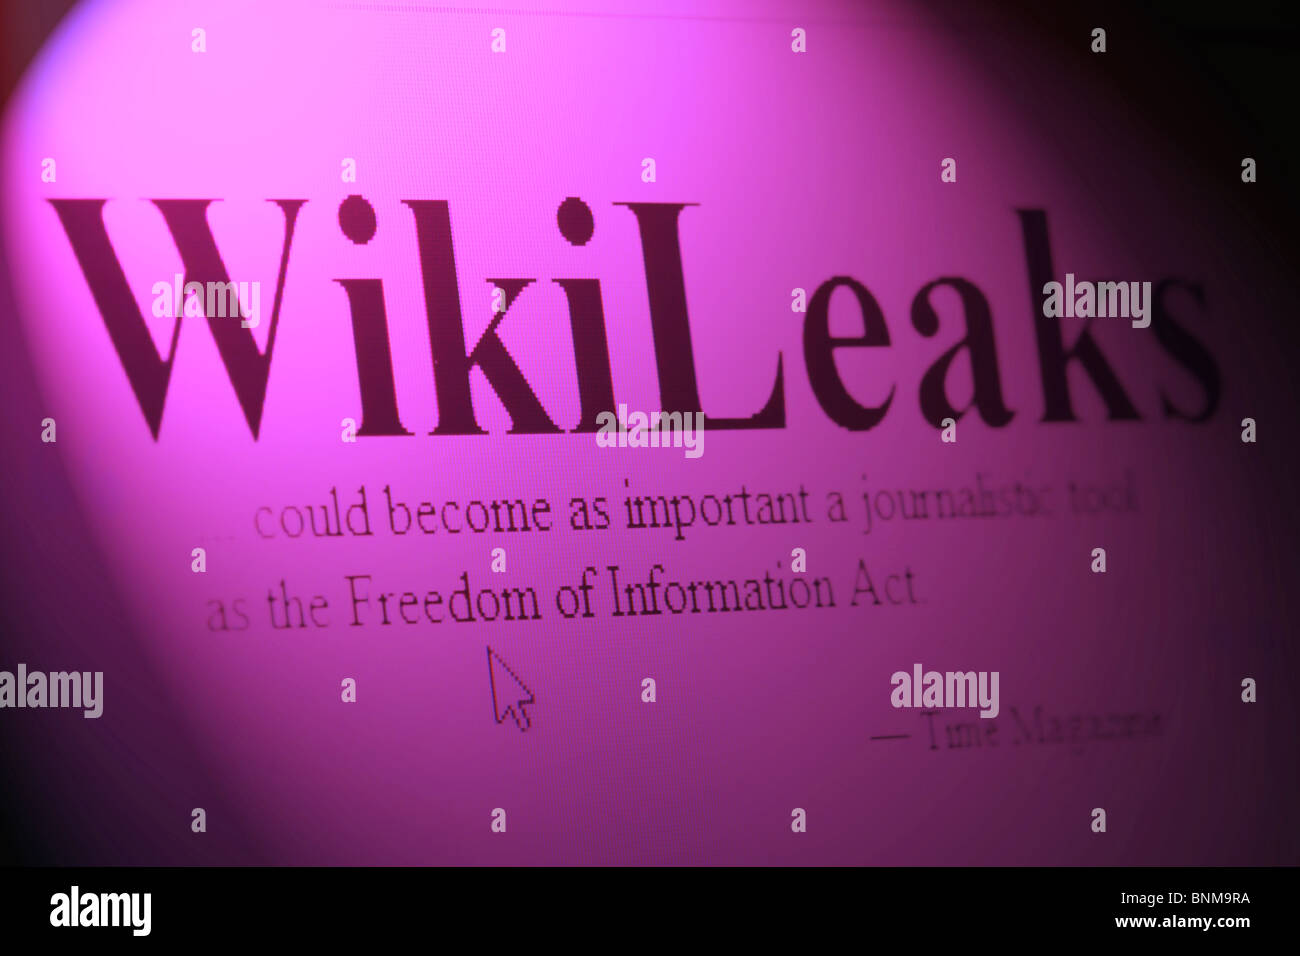 Wikileaks web page Stock Photo